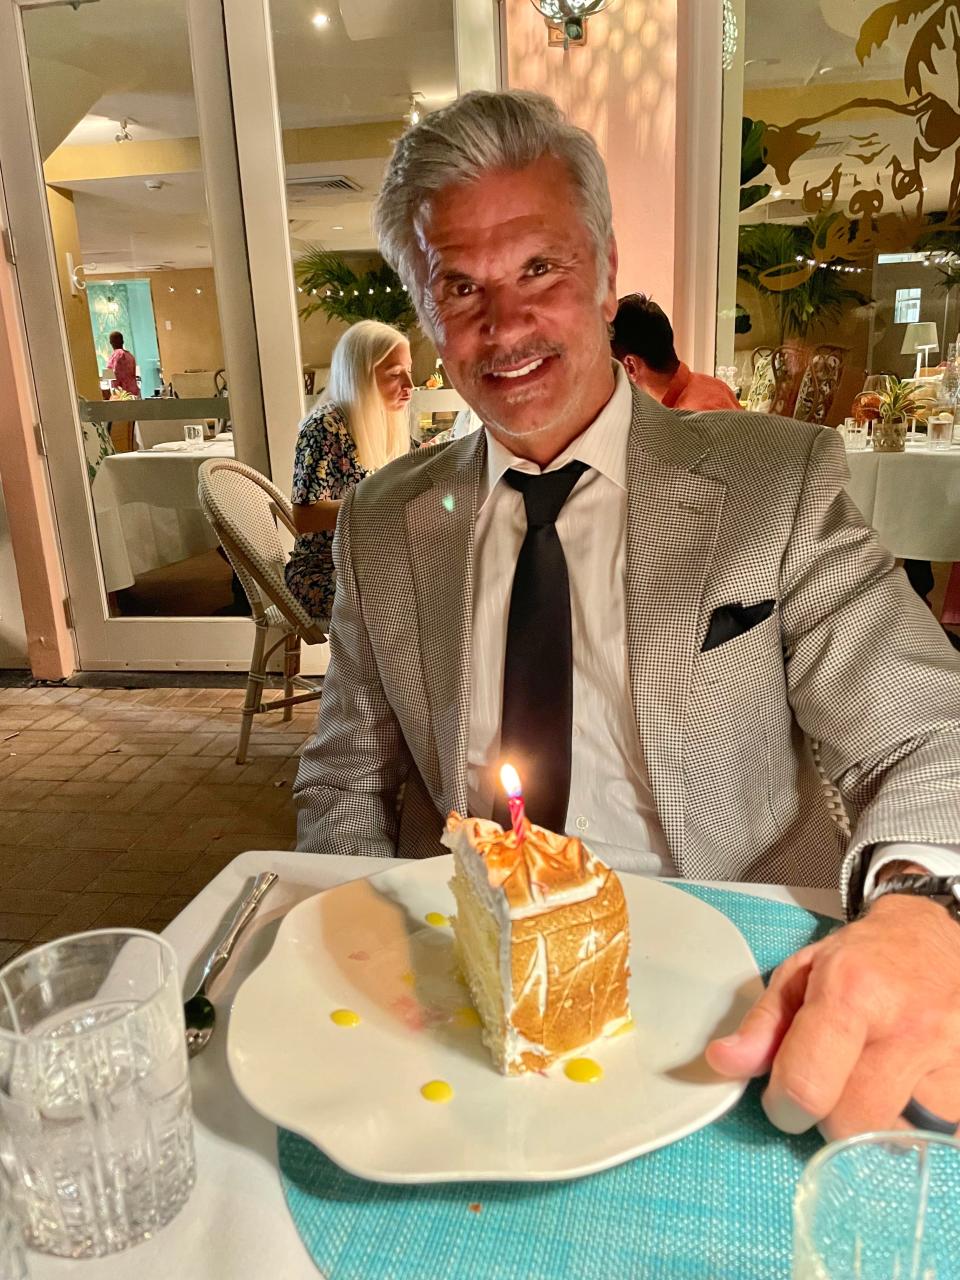 Lorenzo Lamas celebrating his birthday